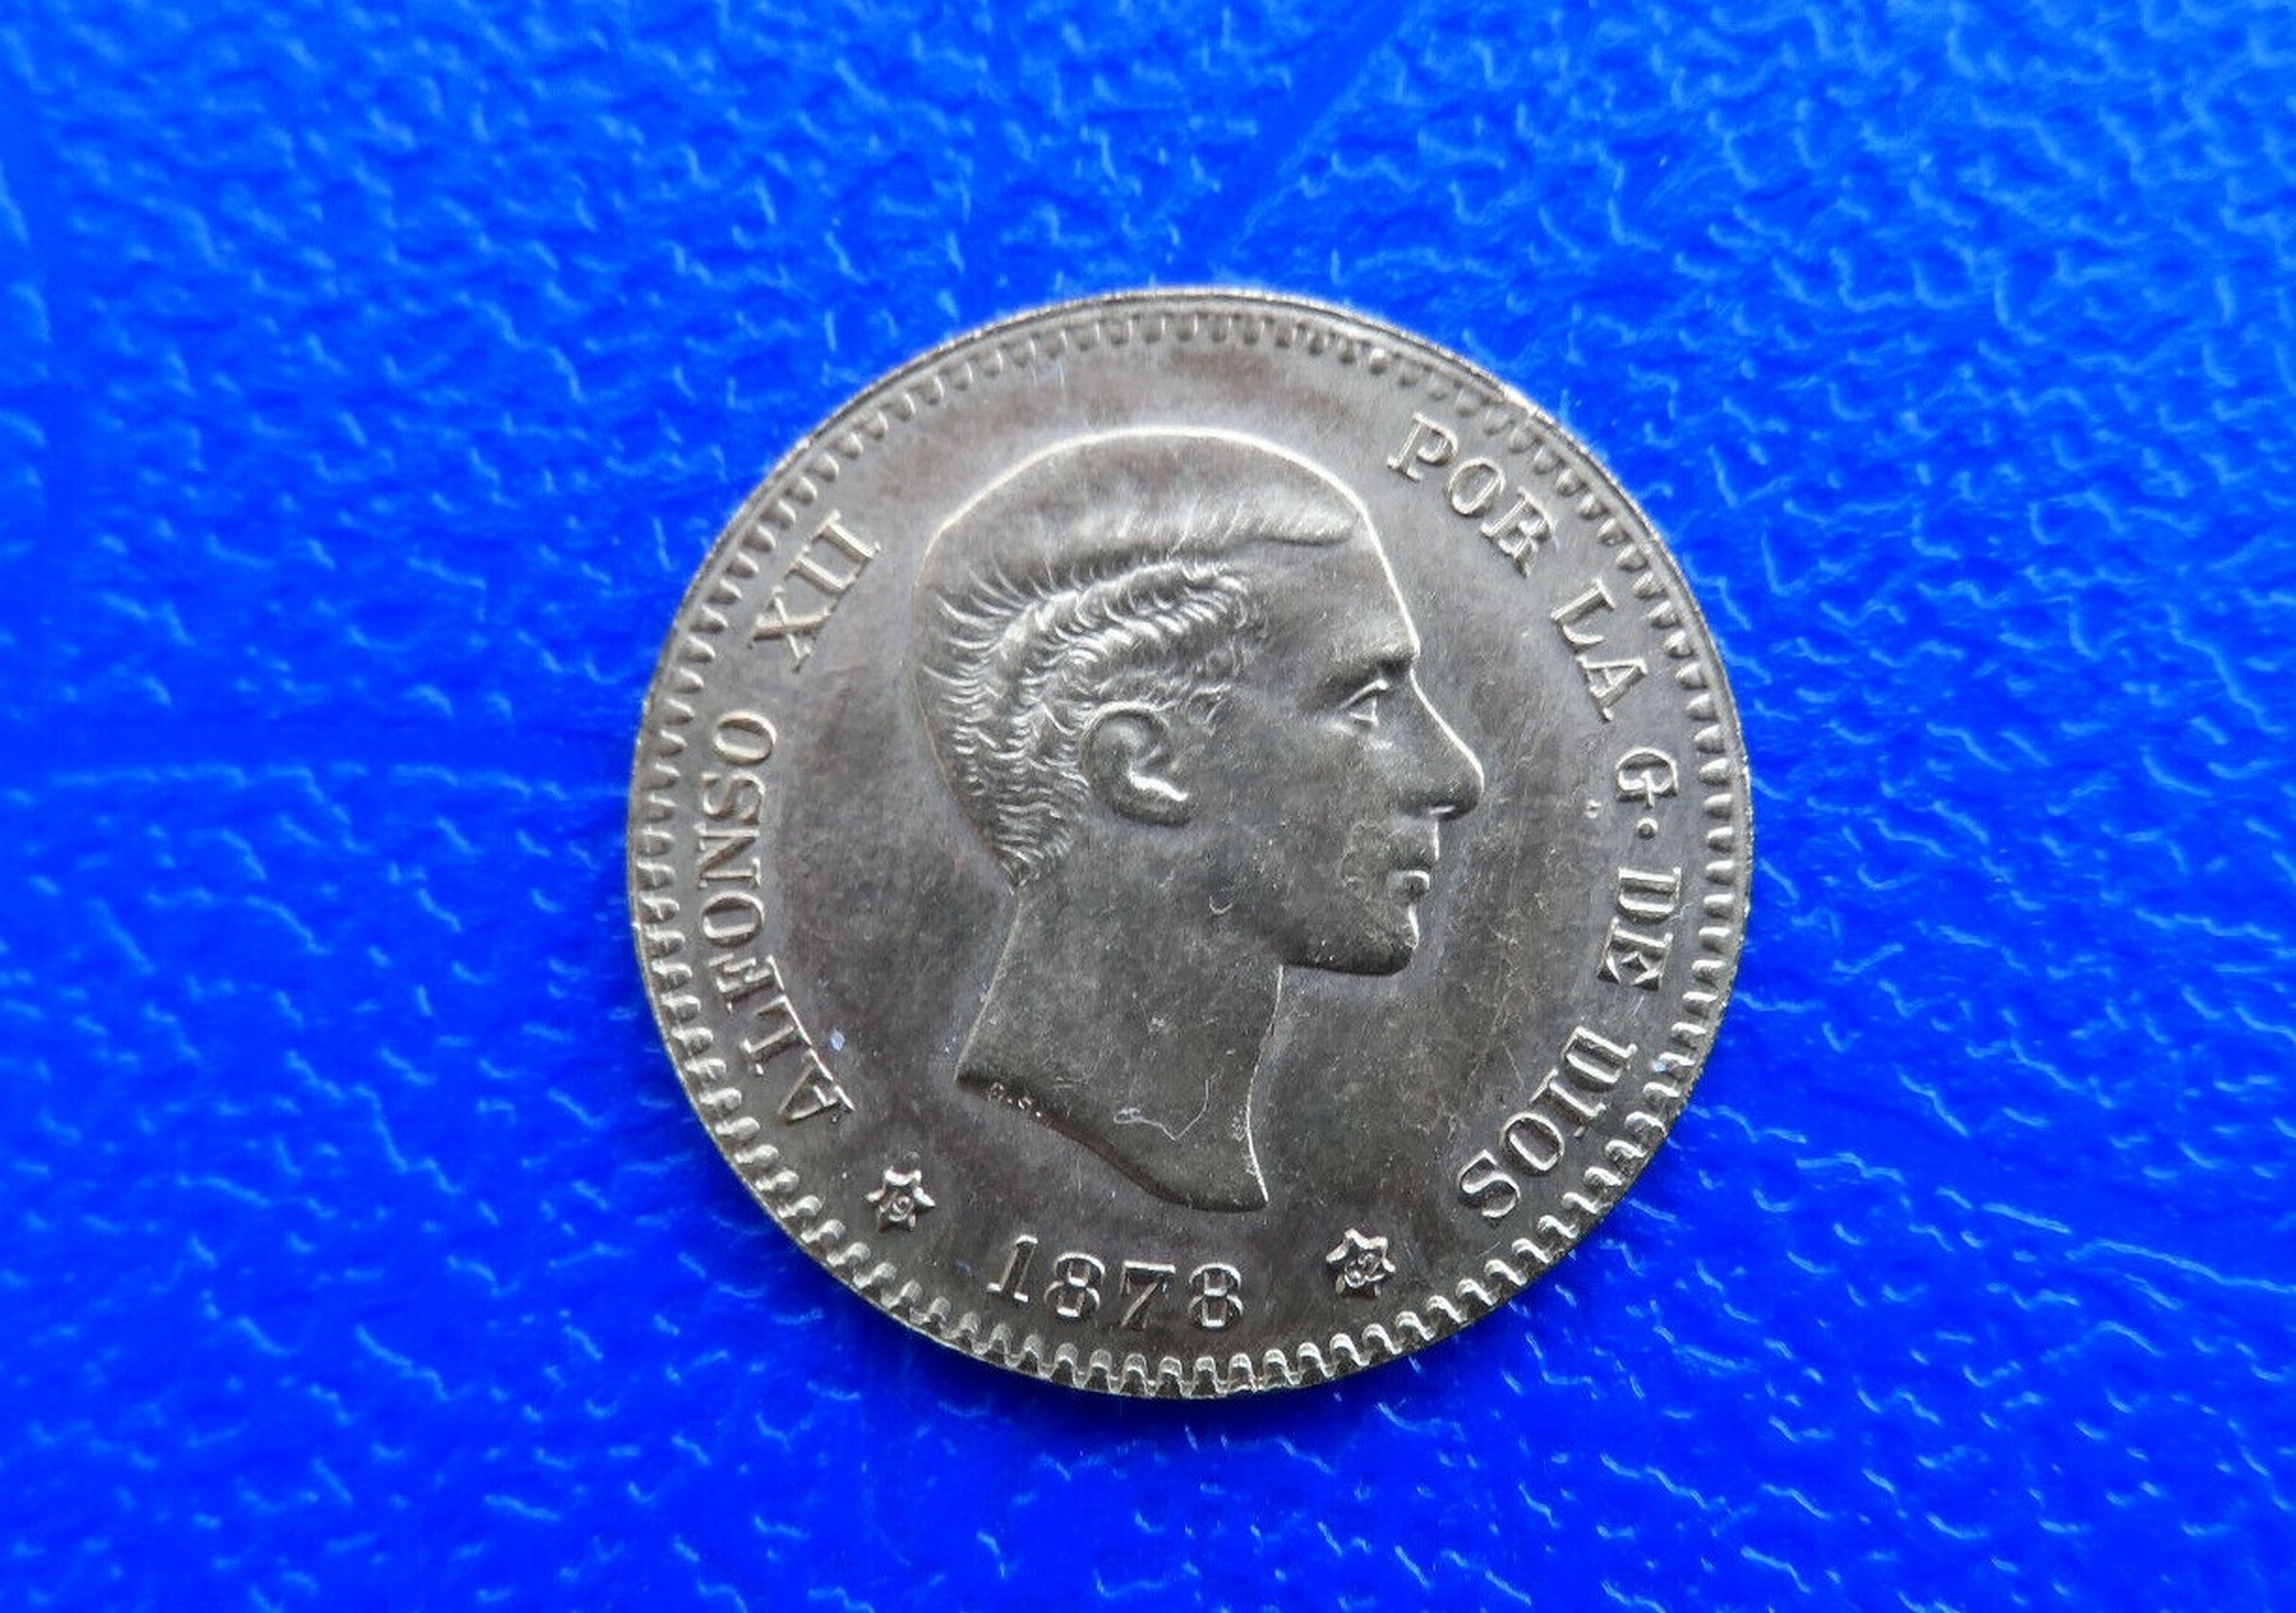 10 pesetas rara